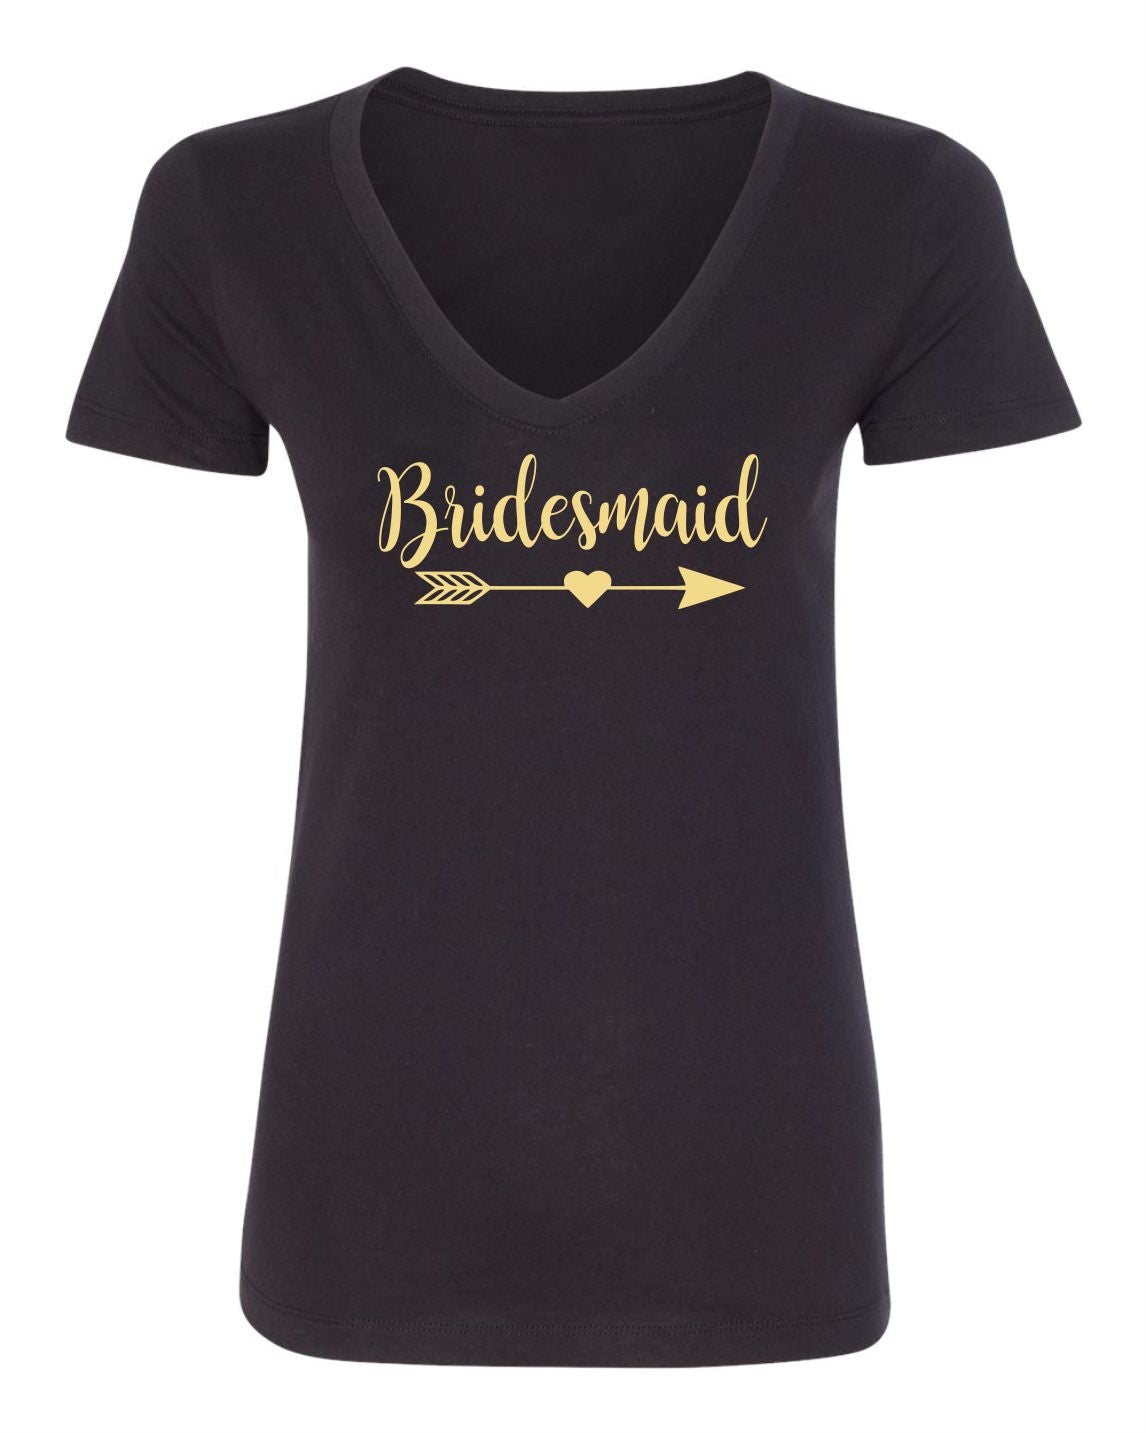 "Bridesmaid" (Arrow Heart Design) T-Shirt